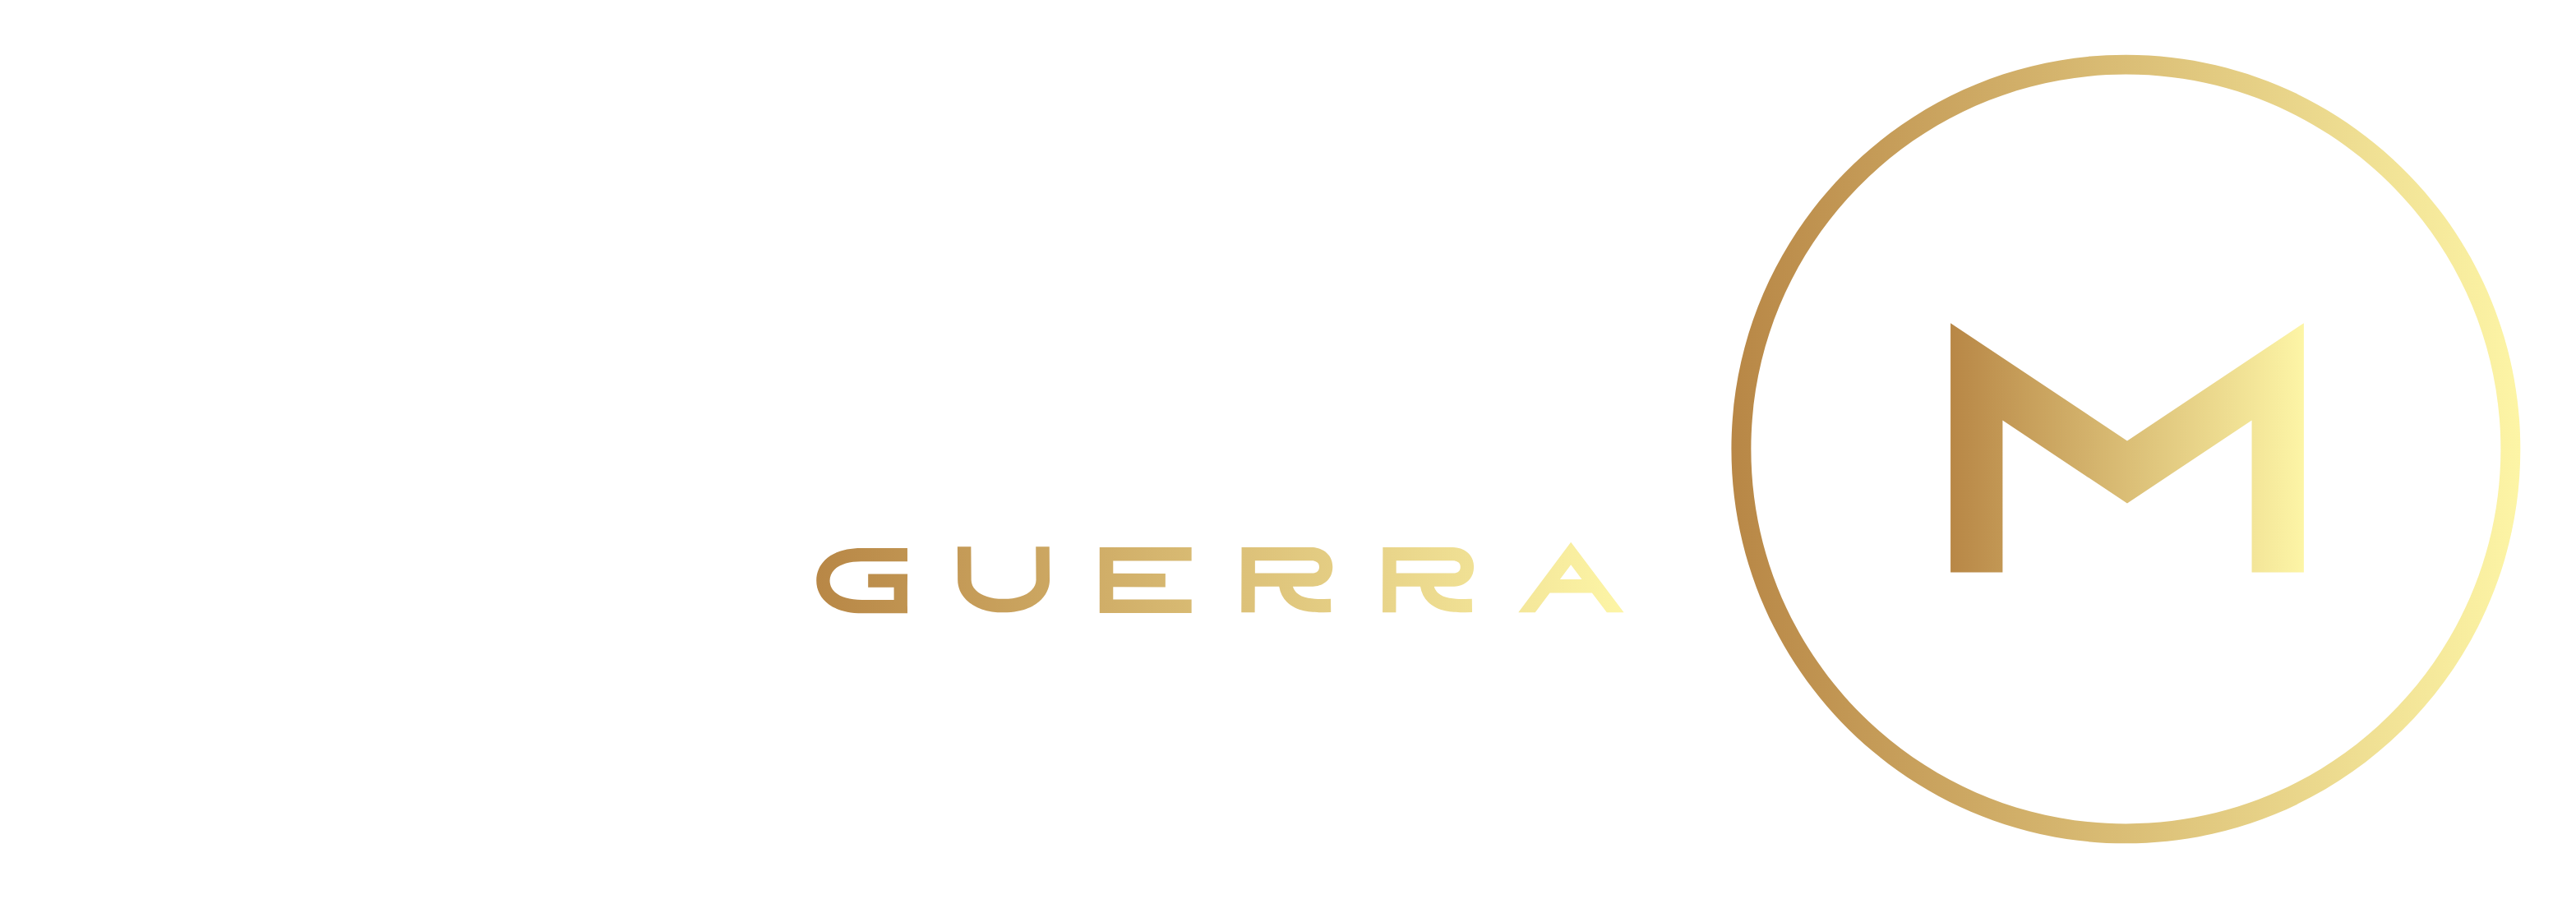 Moreano Guerra Logo